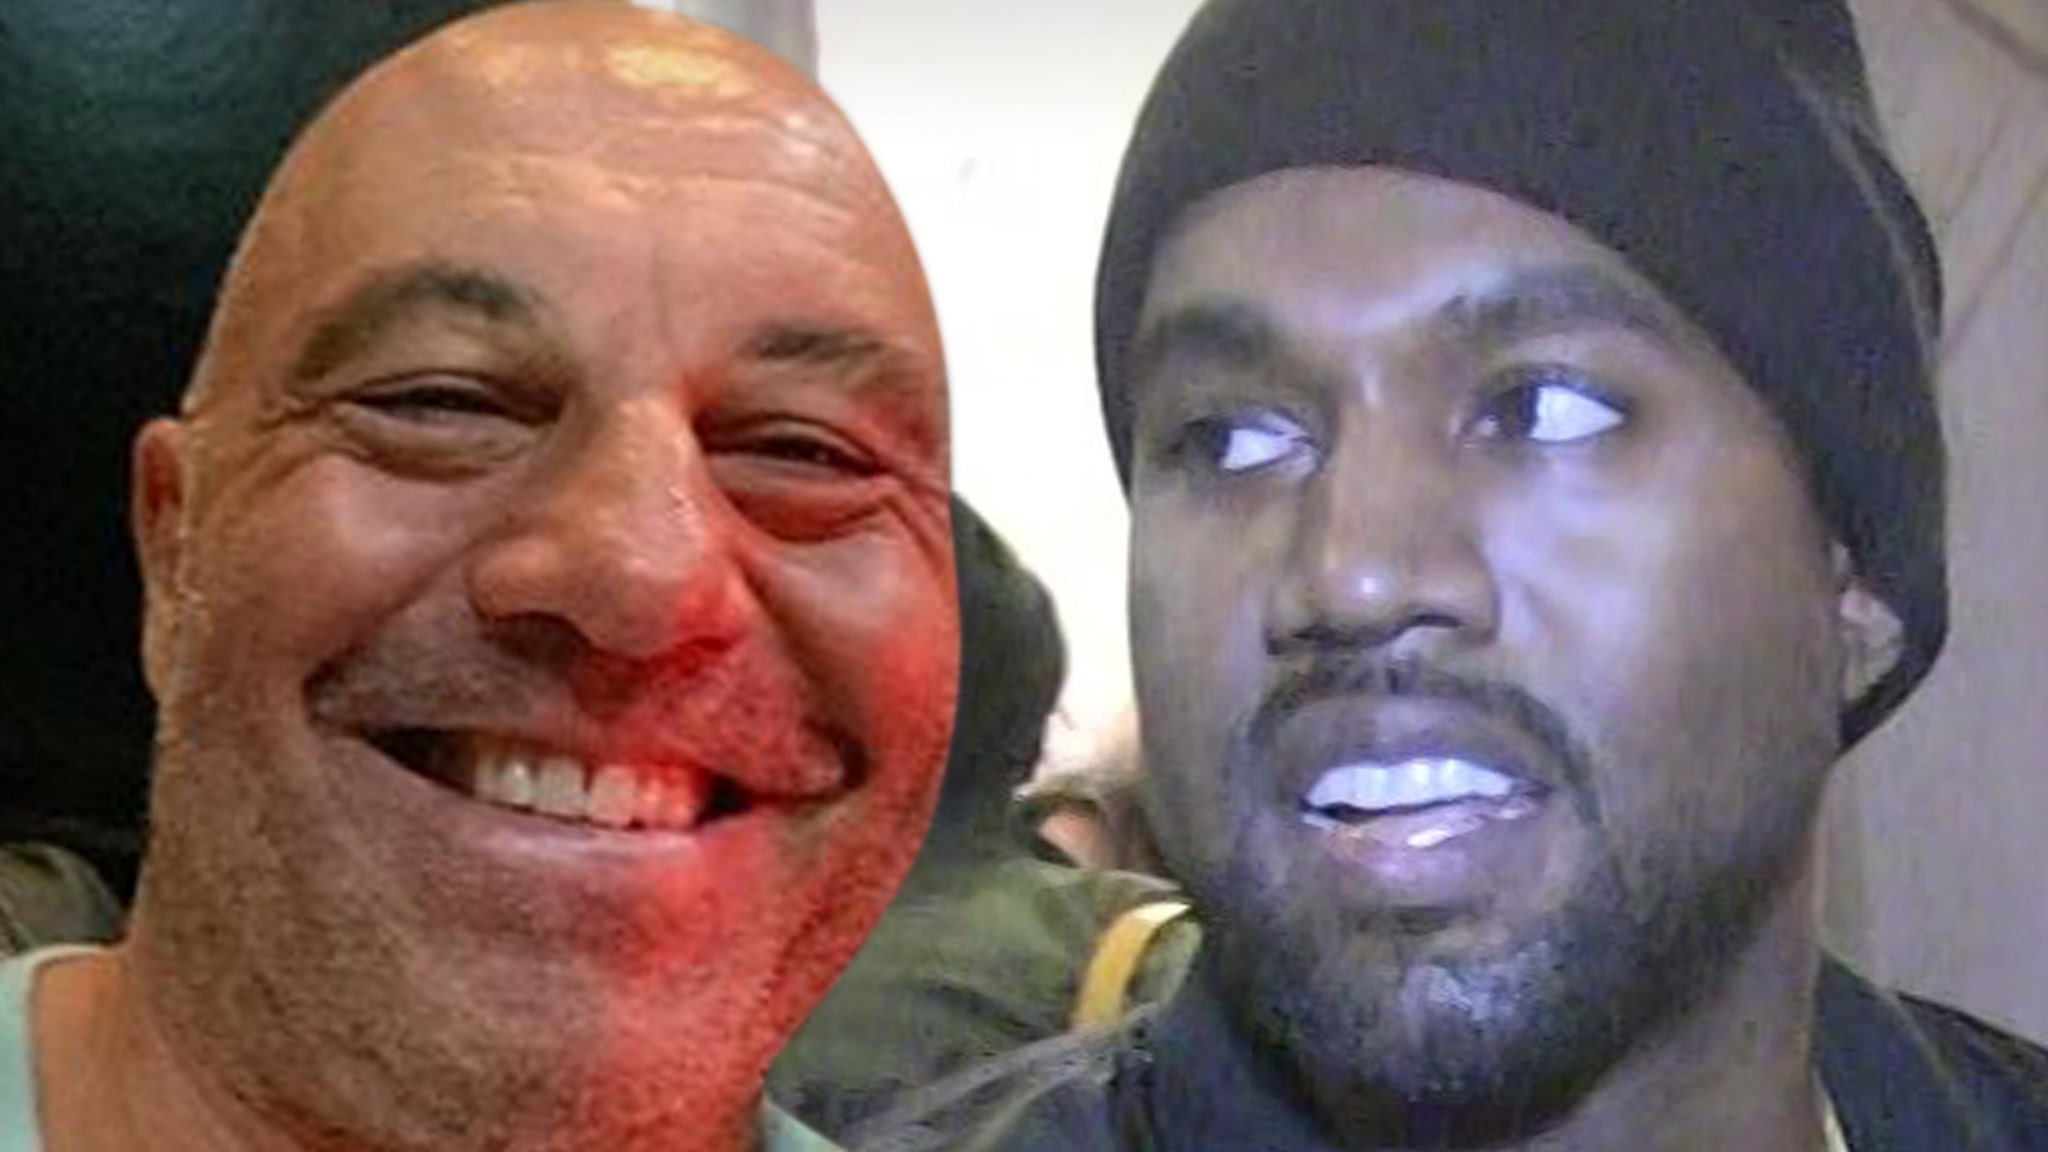 Kanye West Confirms He's Doing Joe Rogan's Podcast, Posts FaceTime Pics - TMZ